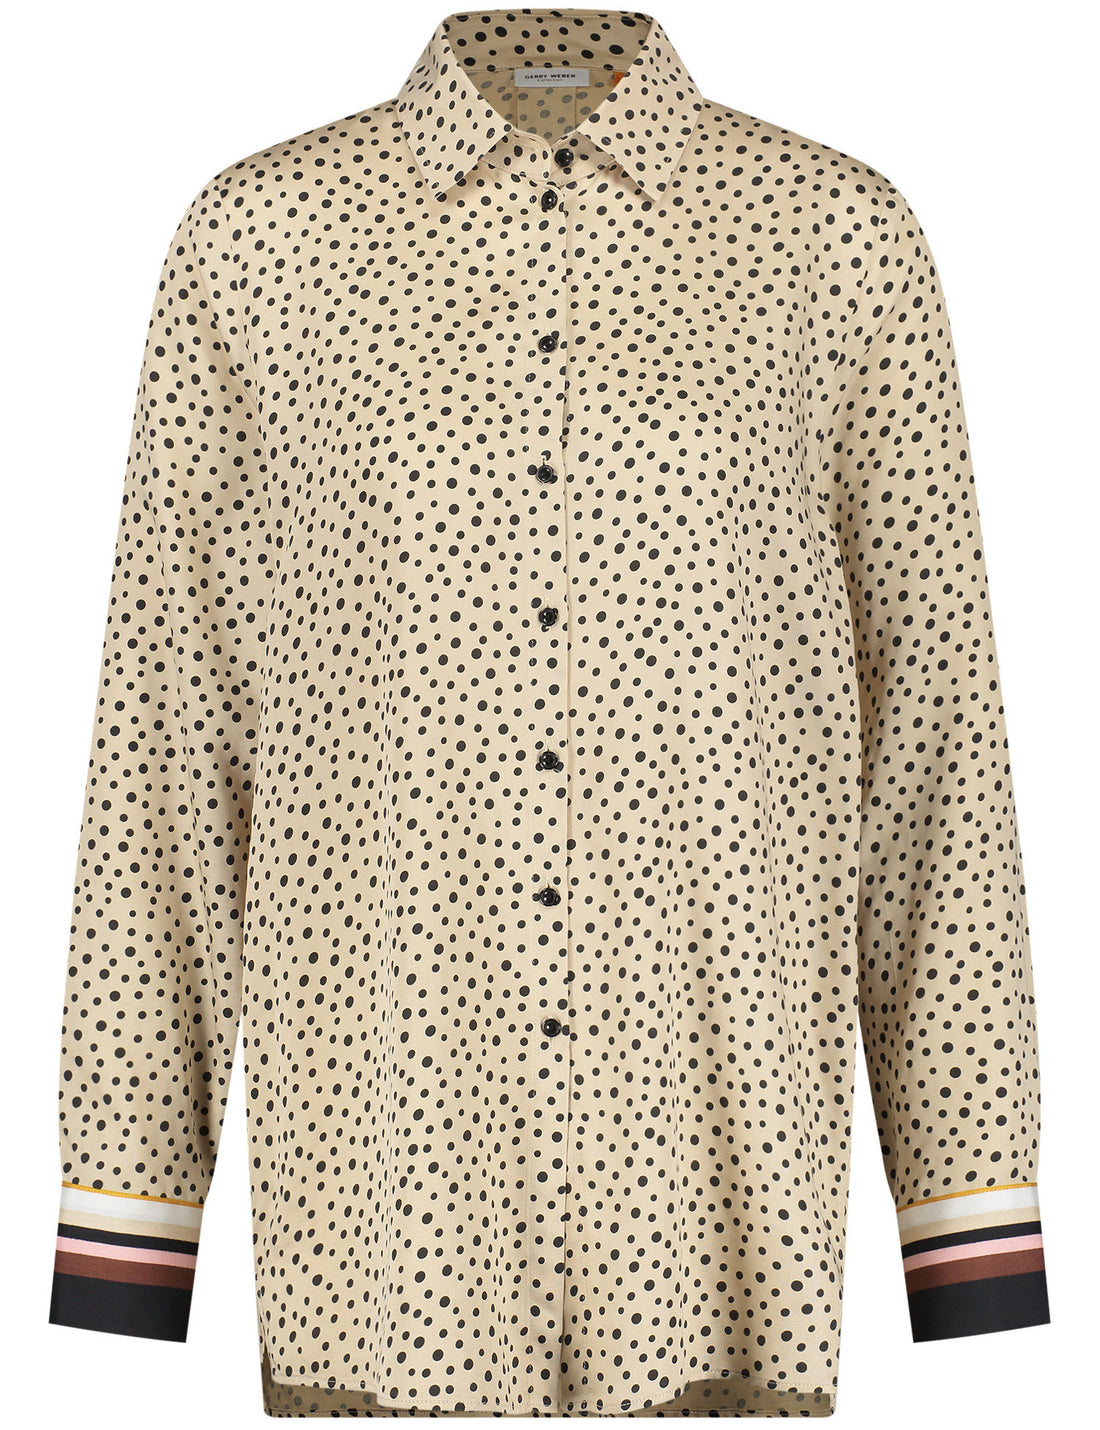 Polka Dot Shirt Blouse With Side Slits_260008-31404_9018_02